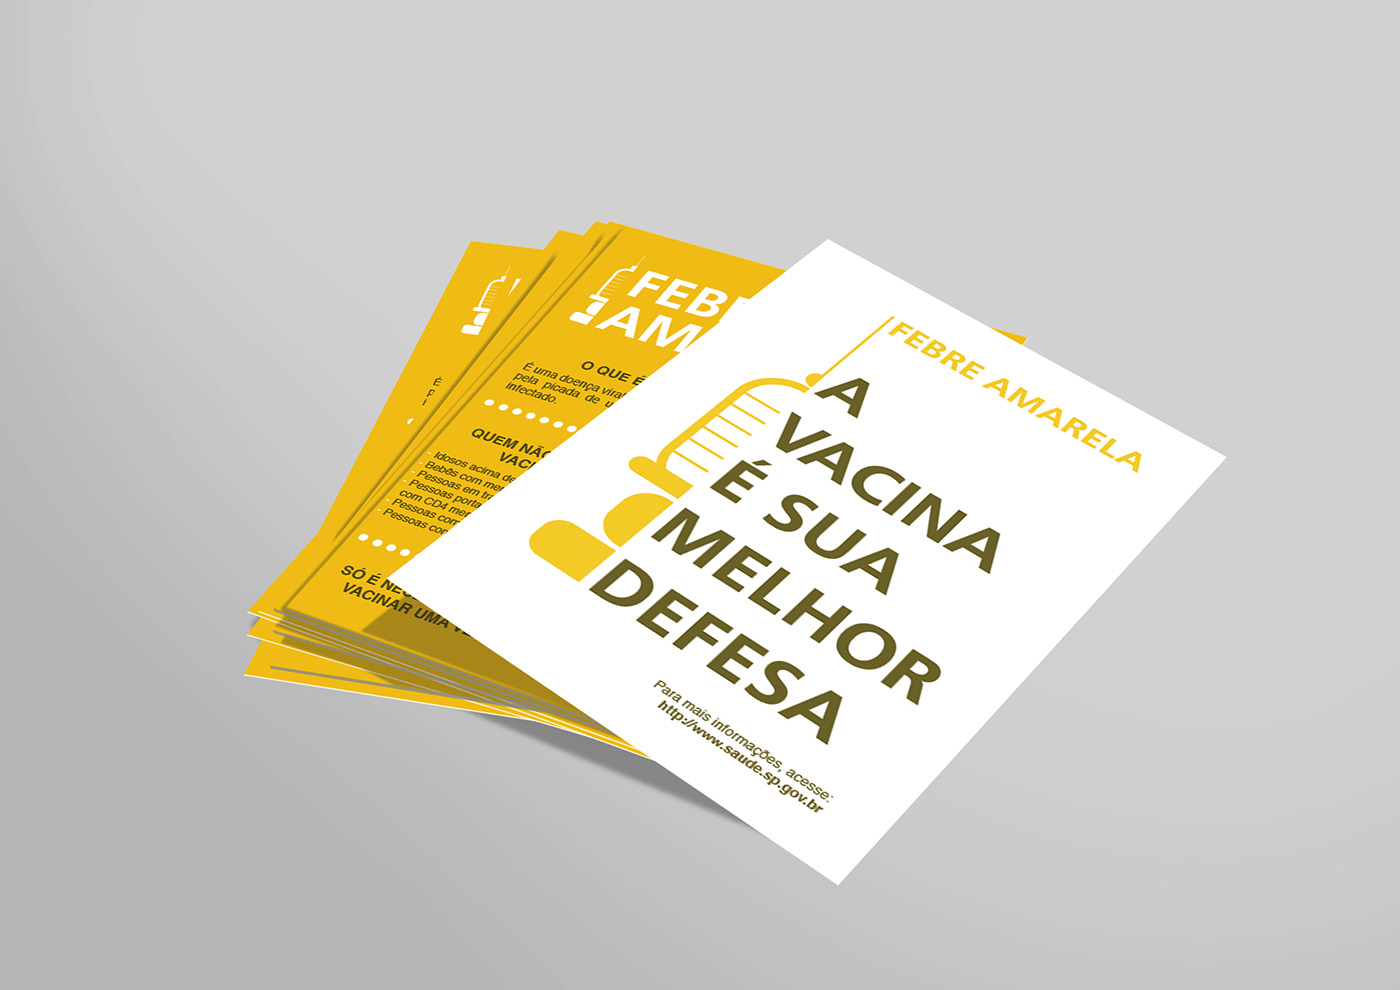 febre amarela Warning yellow fever alerta flyer panfleto cartaz postei